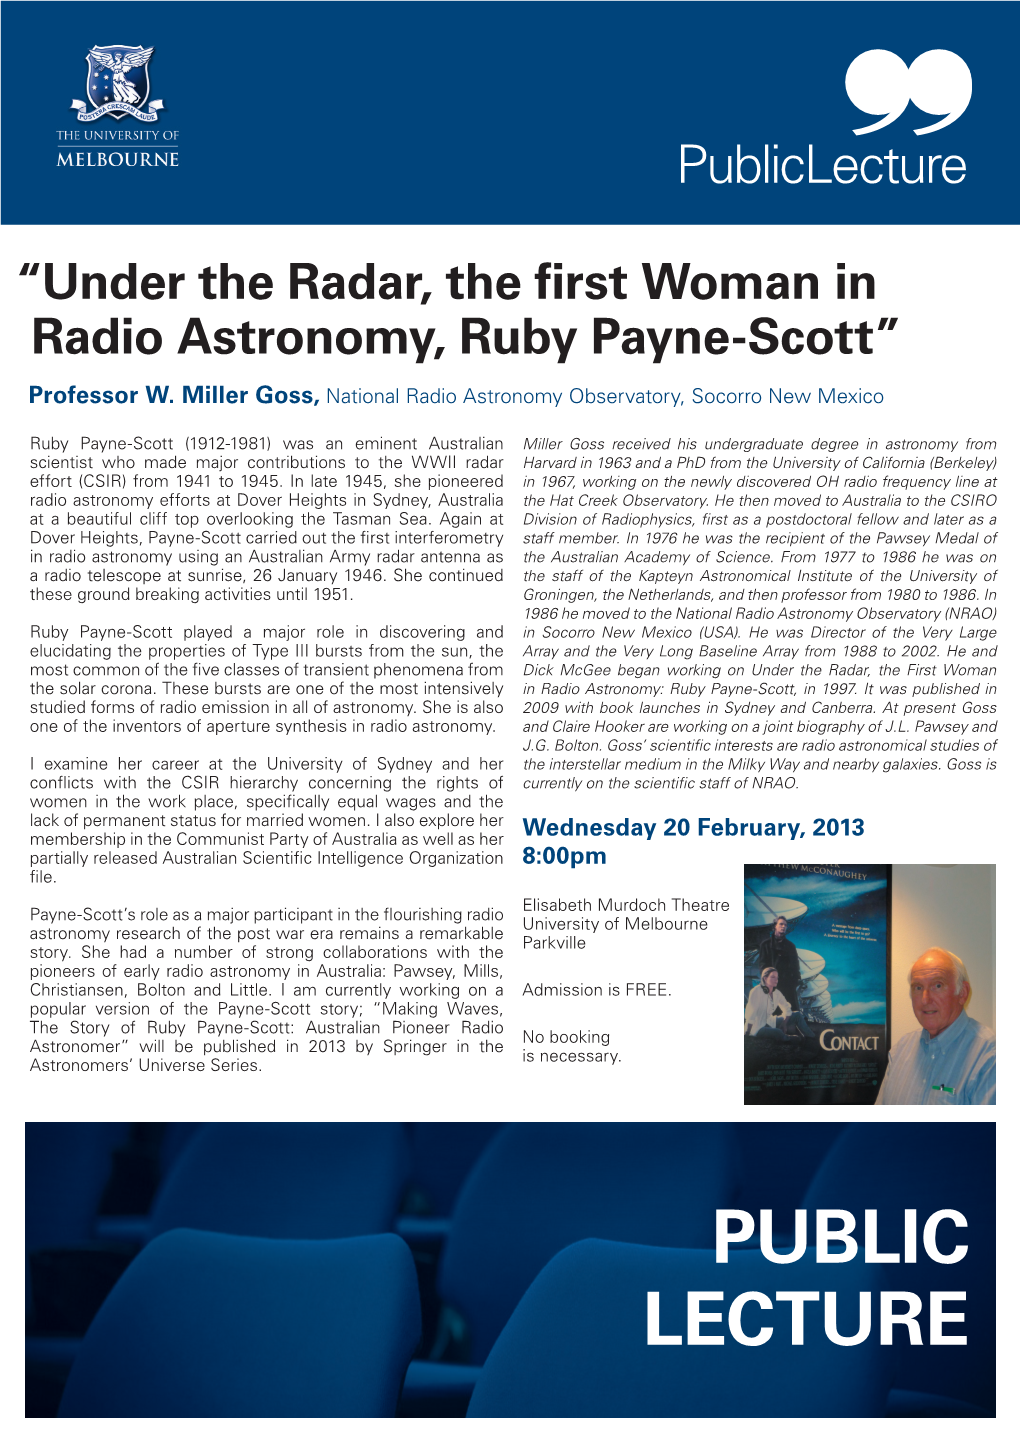 Under the Radar, the First Woman in Radio Astronomy, Ruby Payne-Scott”